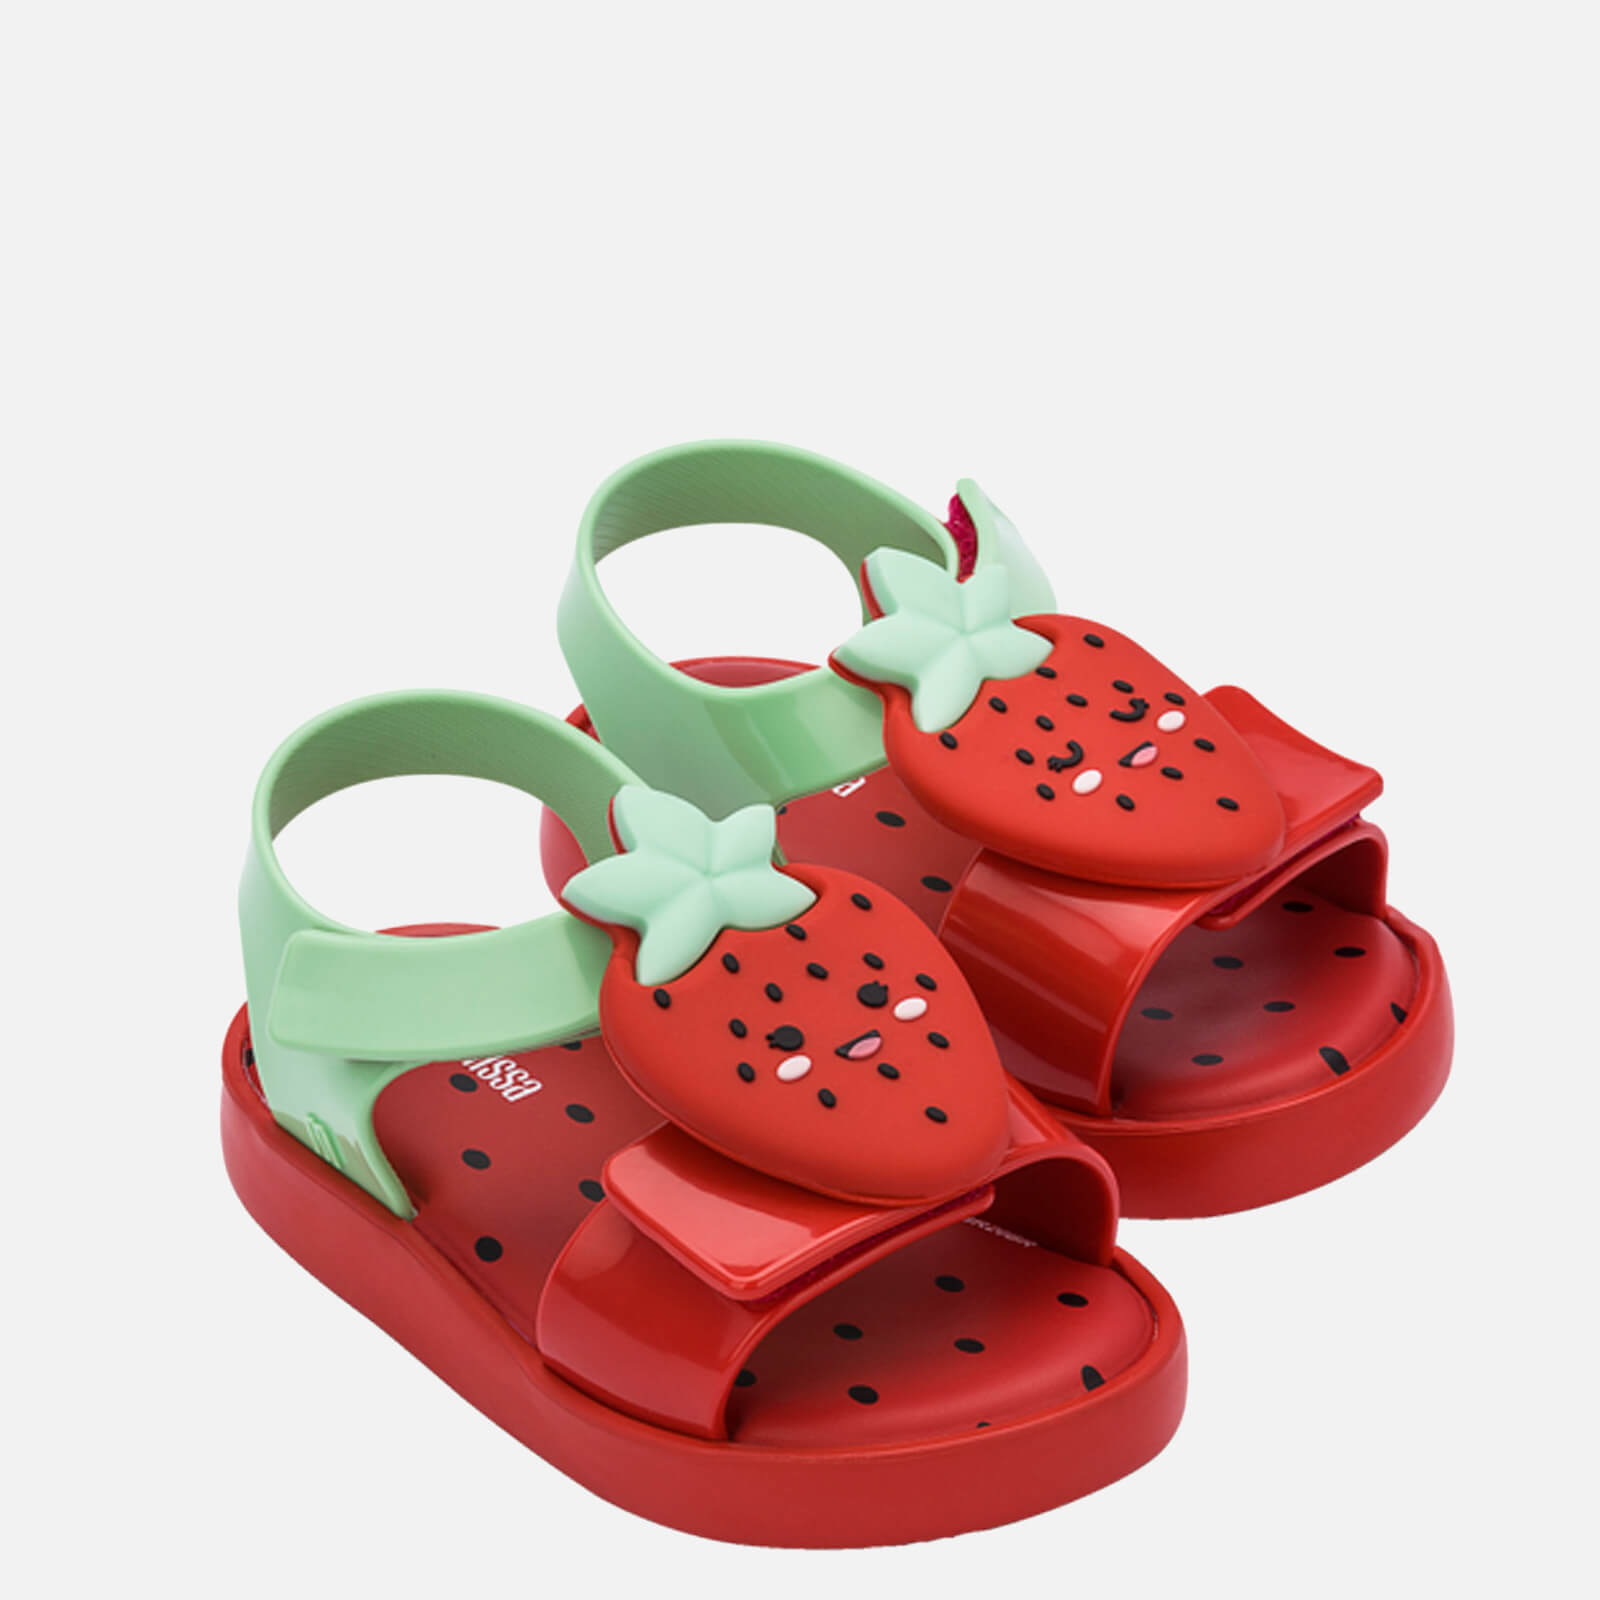 Mini Melissa Toddlers' Mini Jump Fruitland Sandals - Strawberry - UK 4 Toddler